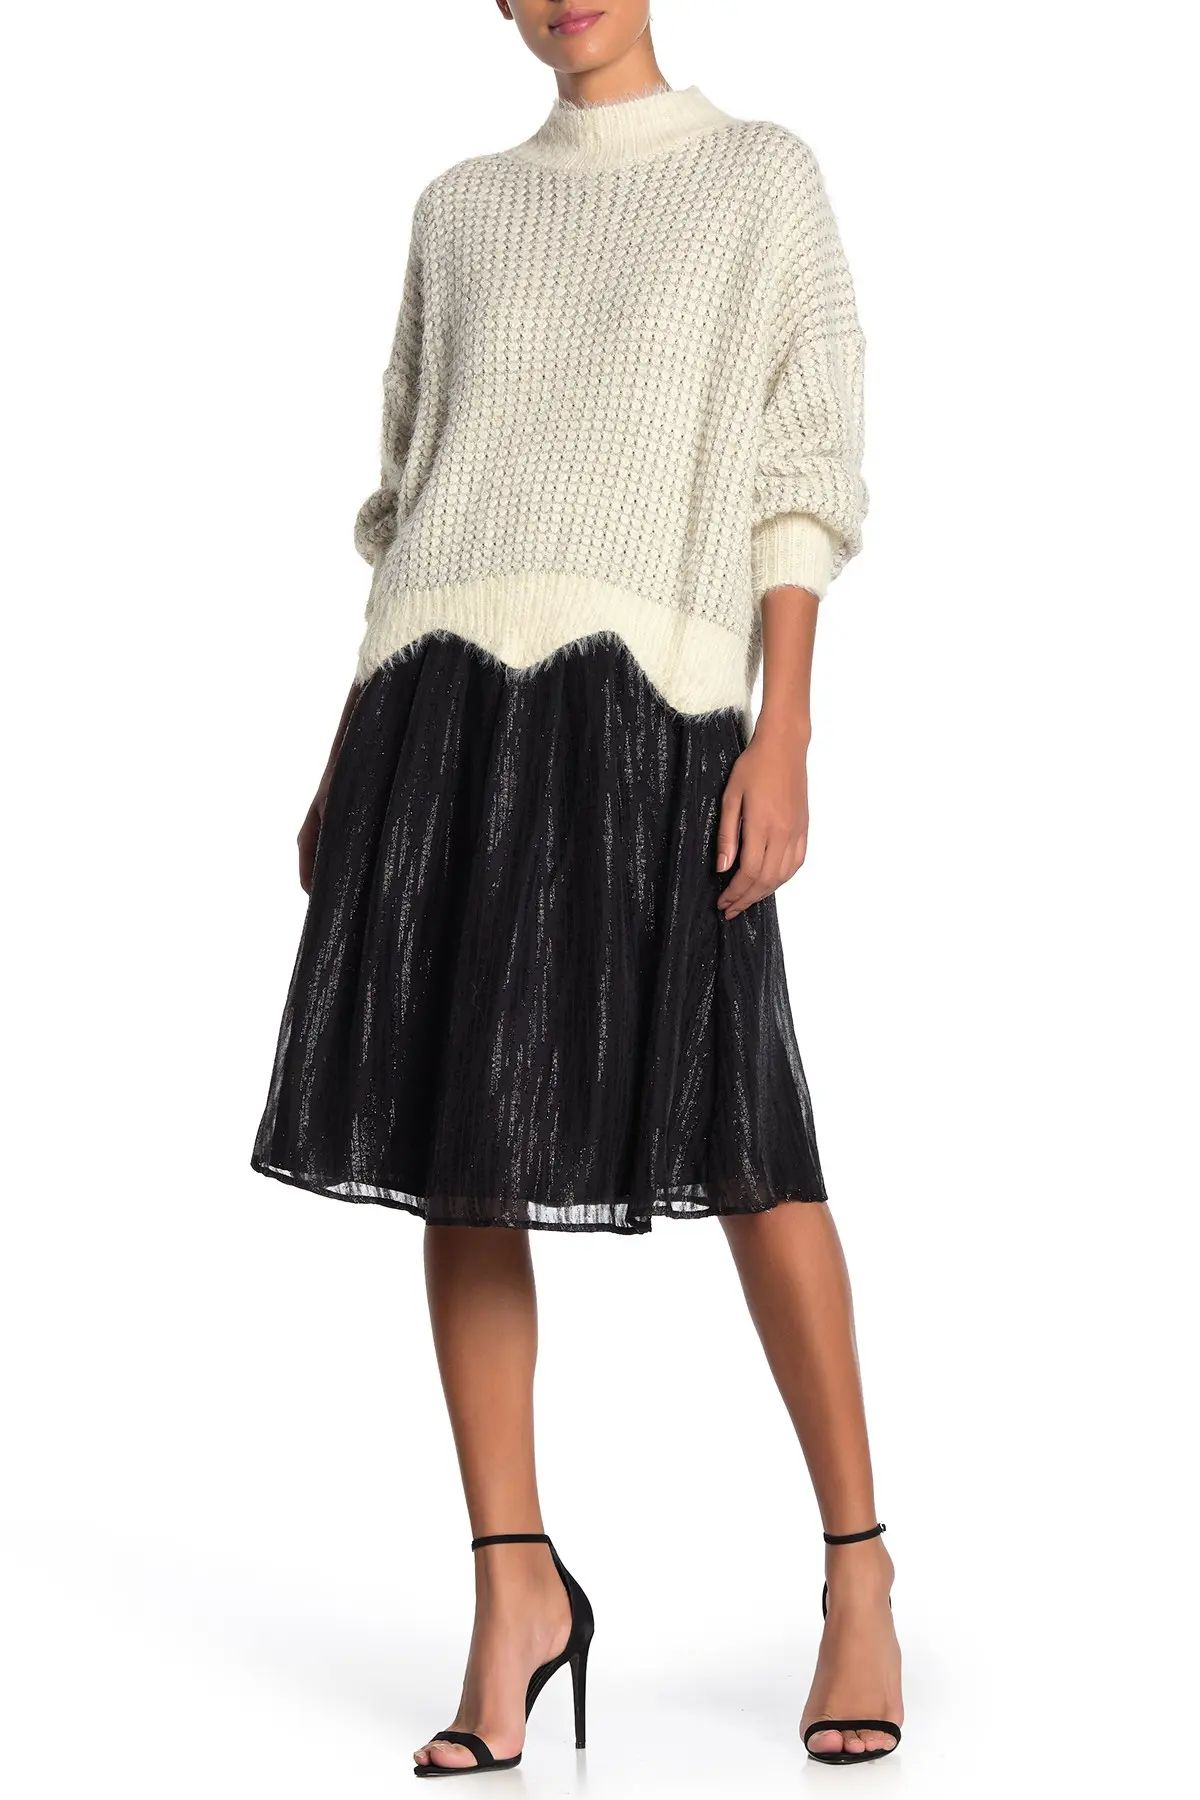 FRNCH Holiday Sequin Skirt at Nordstrom Rack | Nordstrom Rack